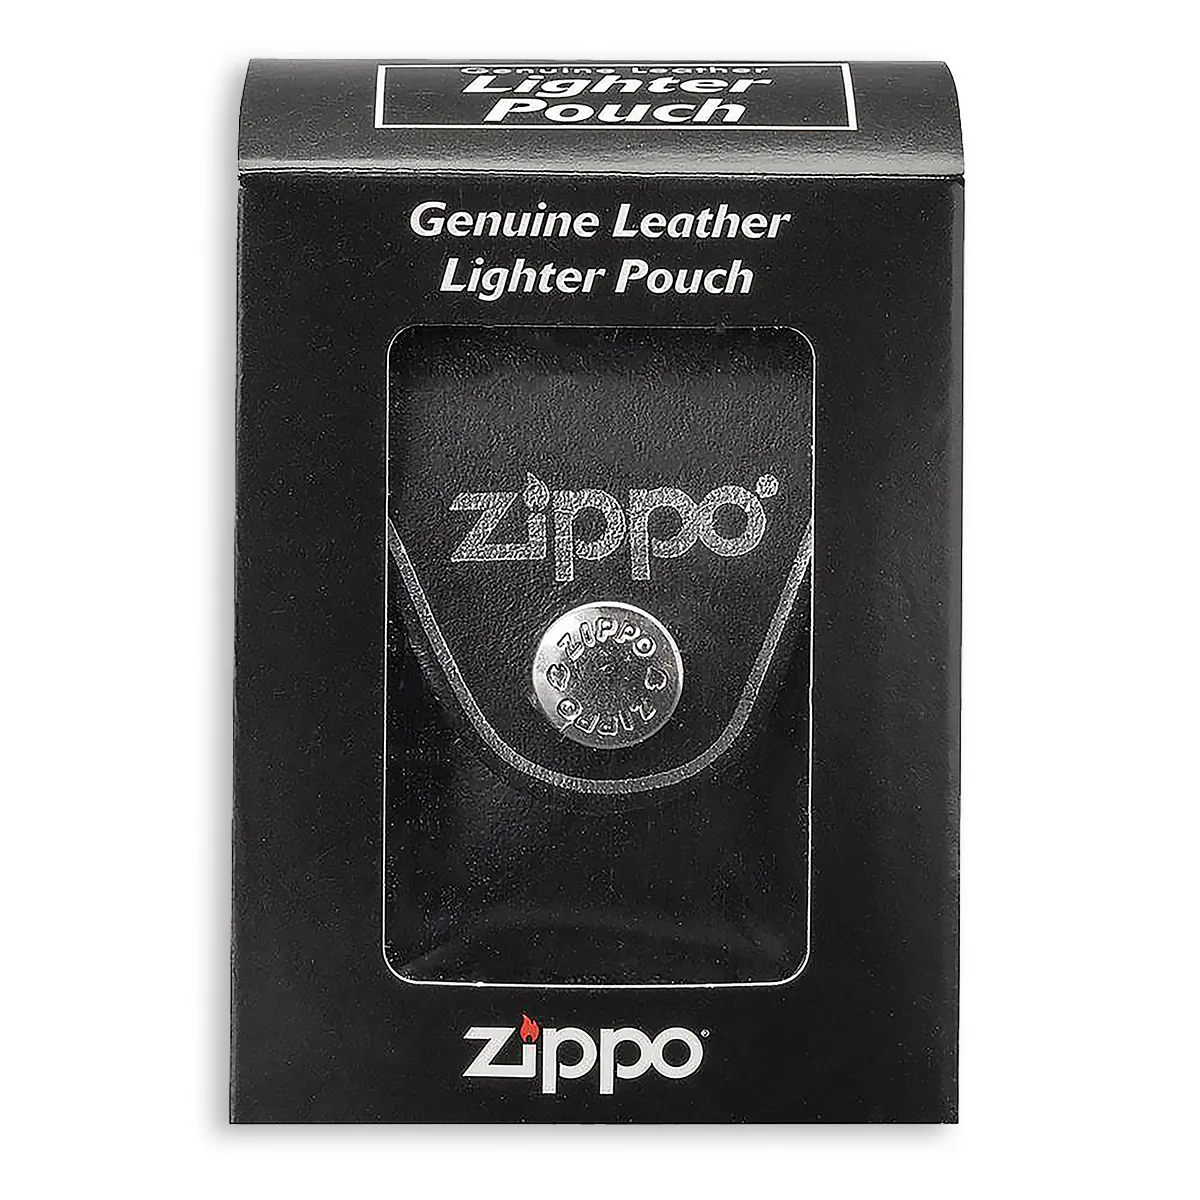 ZIPPO Tasche schwarz mit Lasche verpackt in Originalverpackung